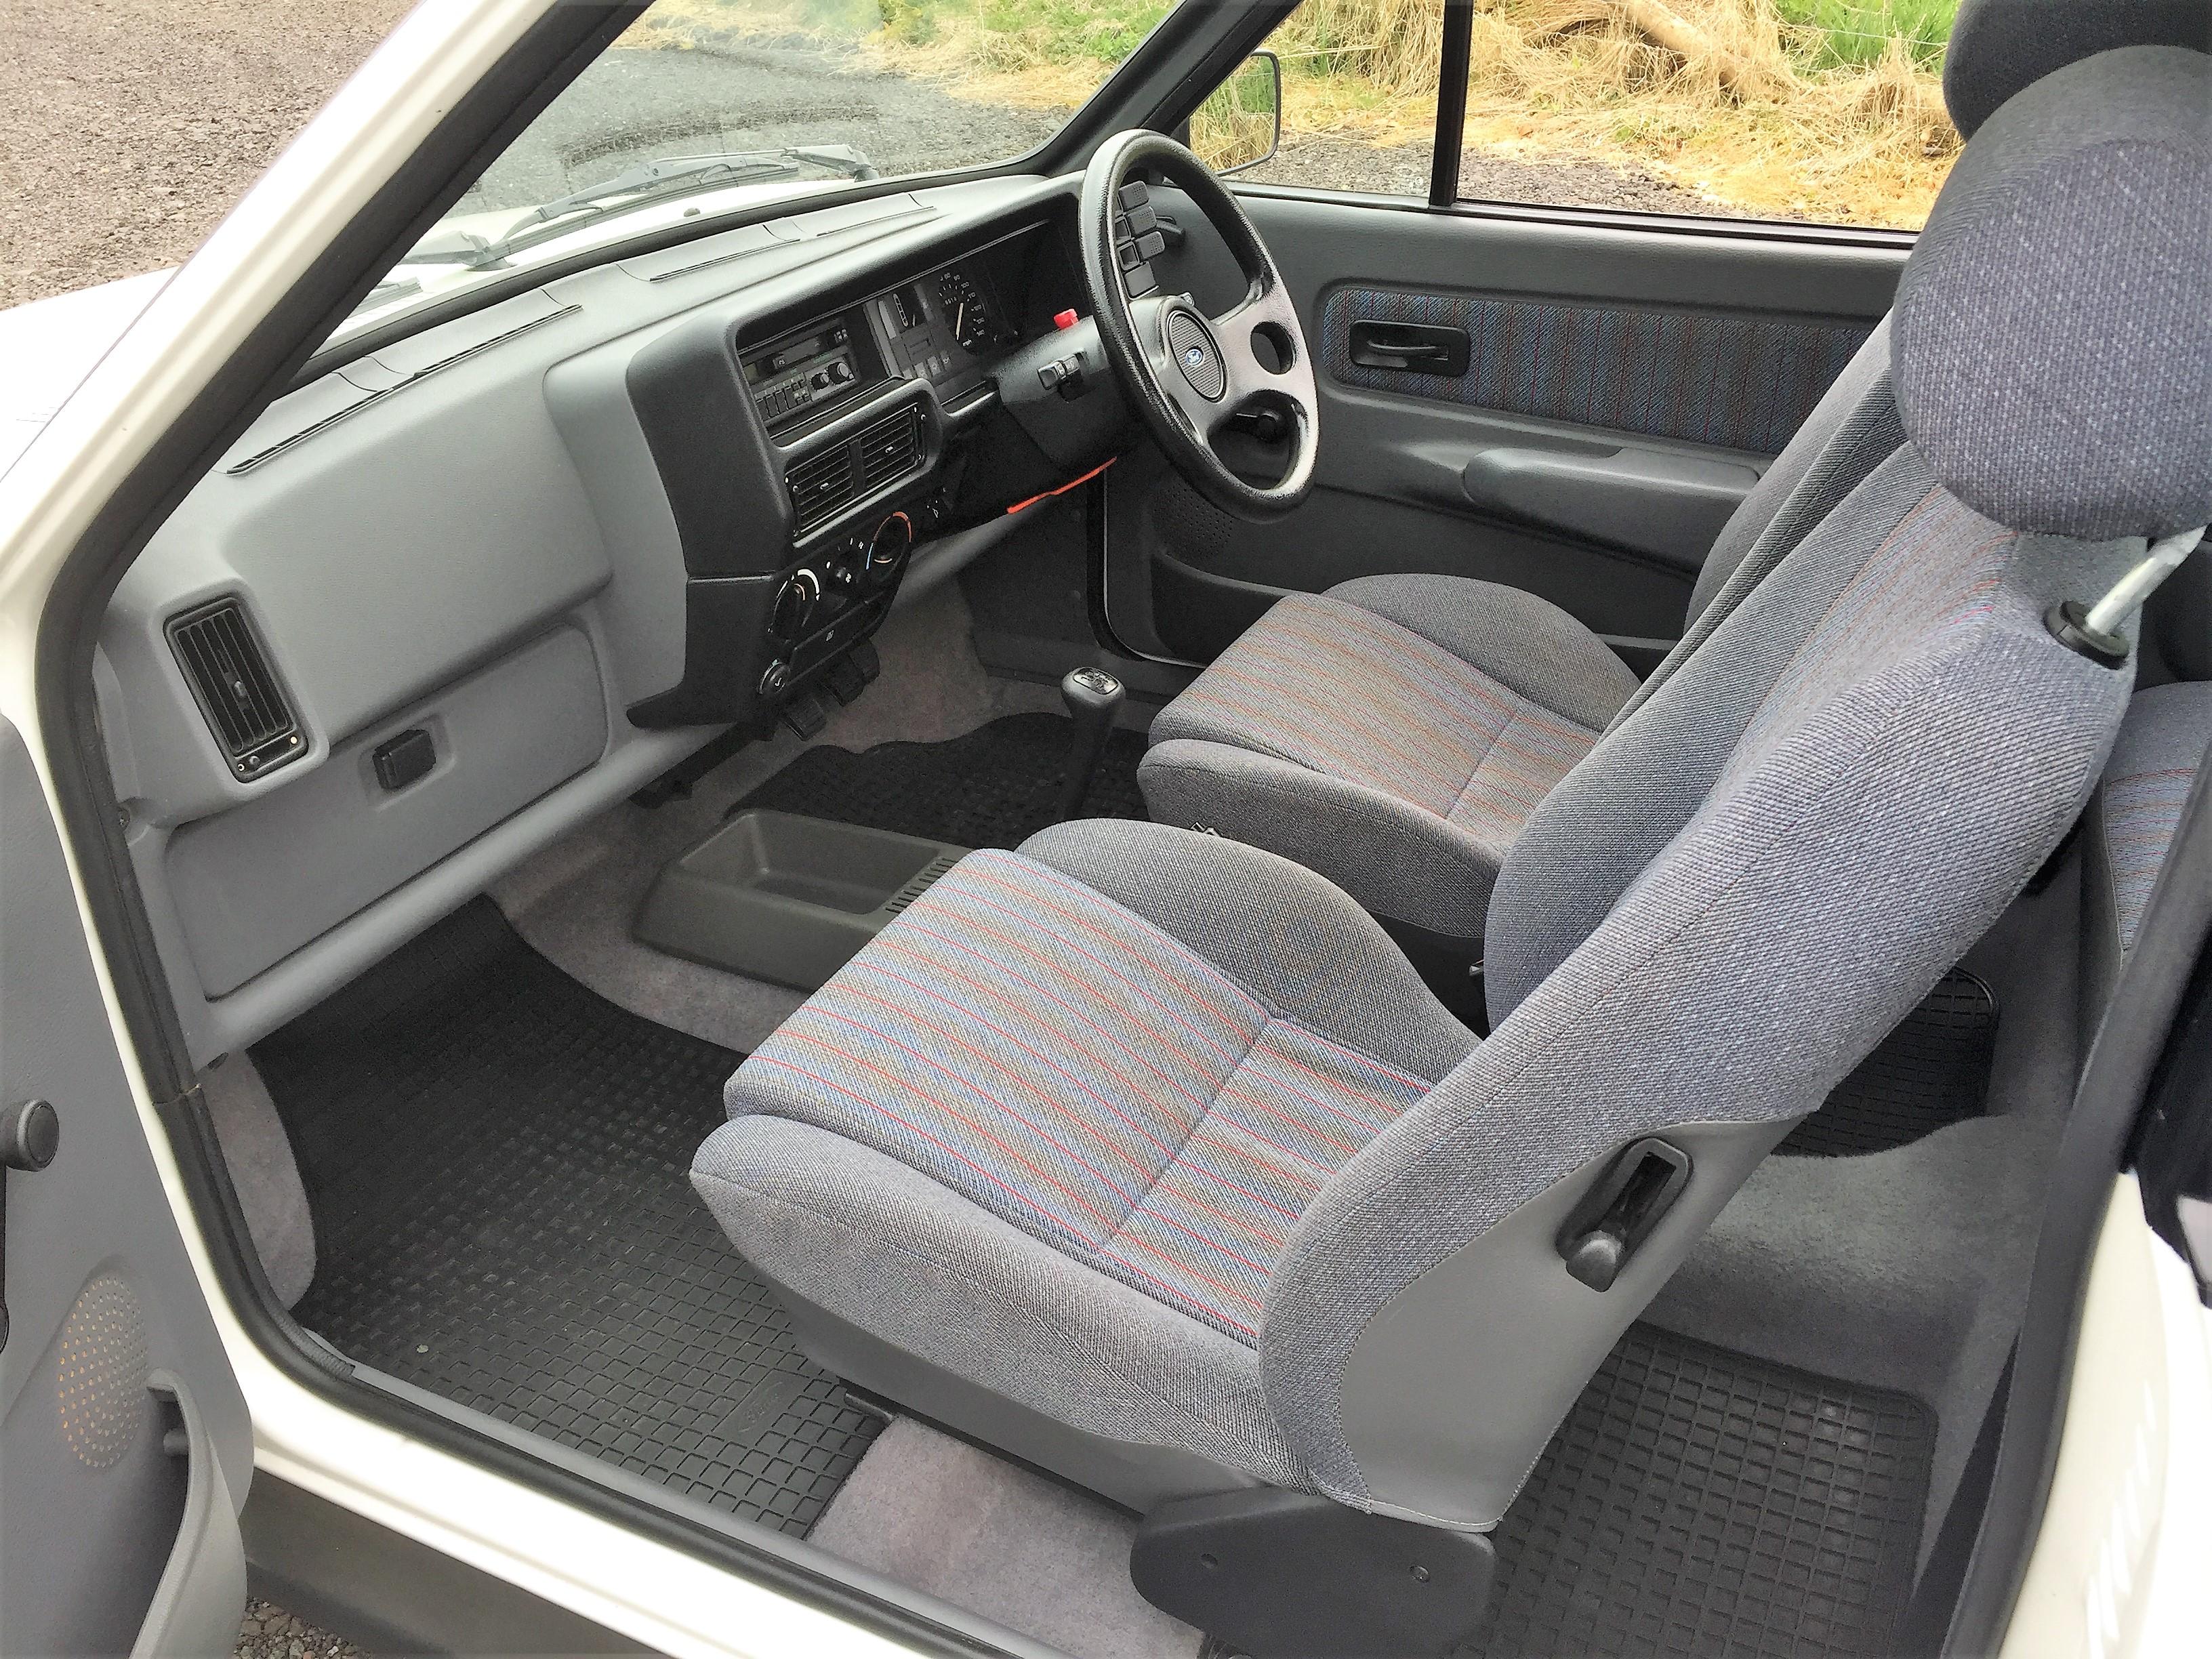 1987 Ford Fiesta XR2 - 19,000 miles